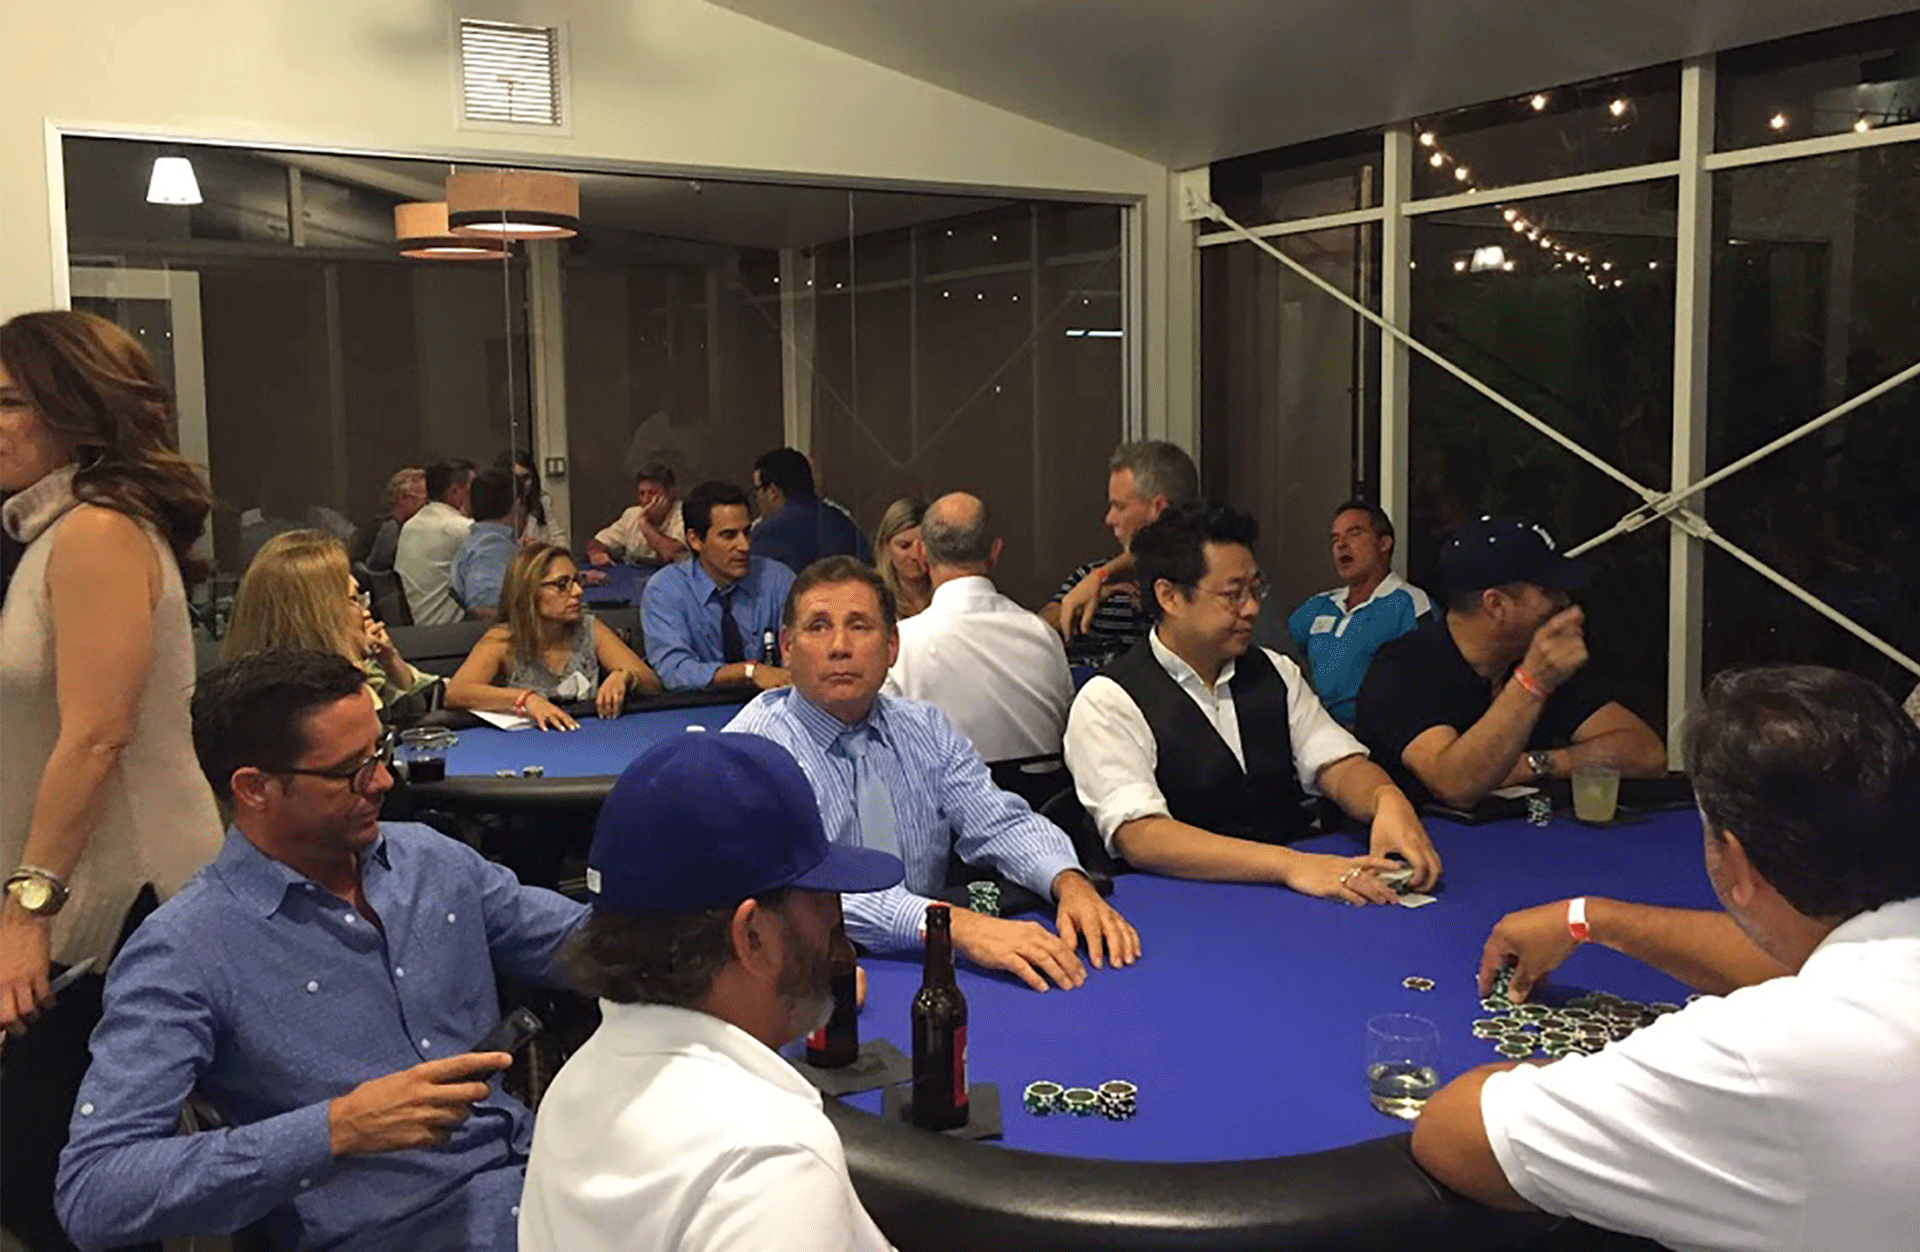 oceans 11 casino poker tournaments